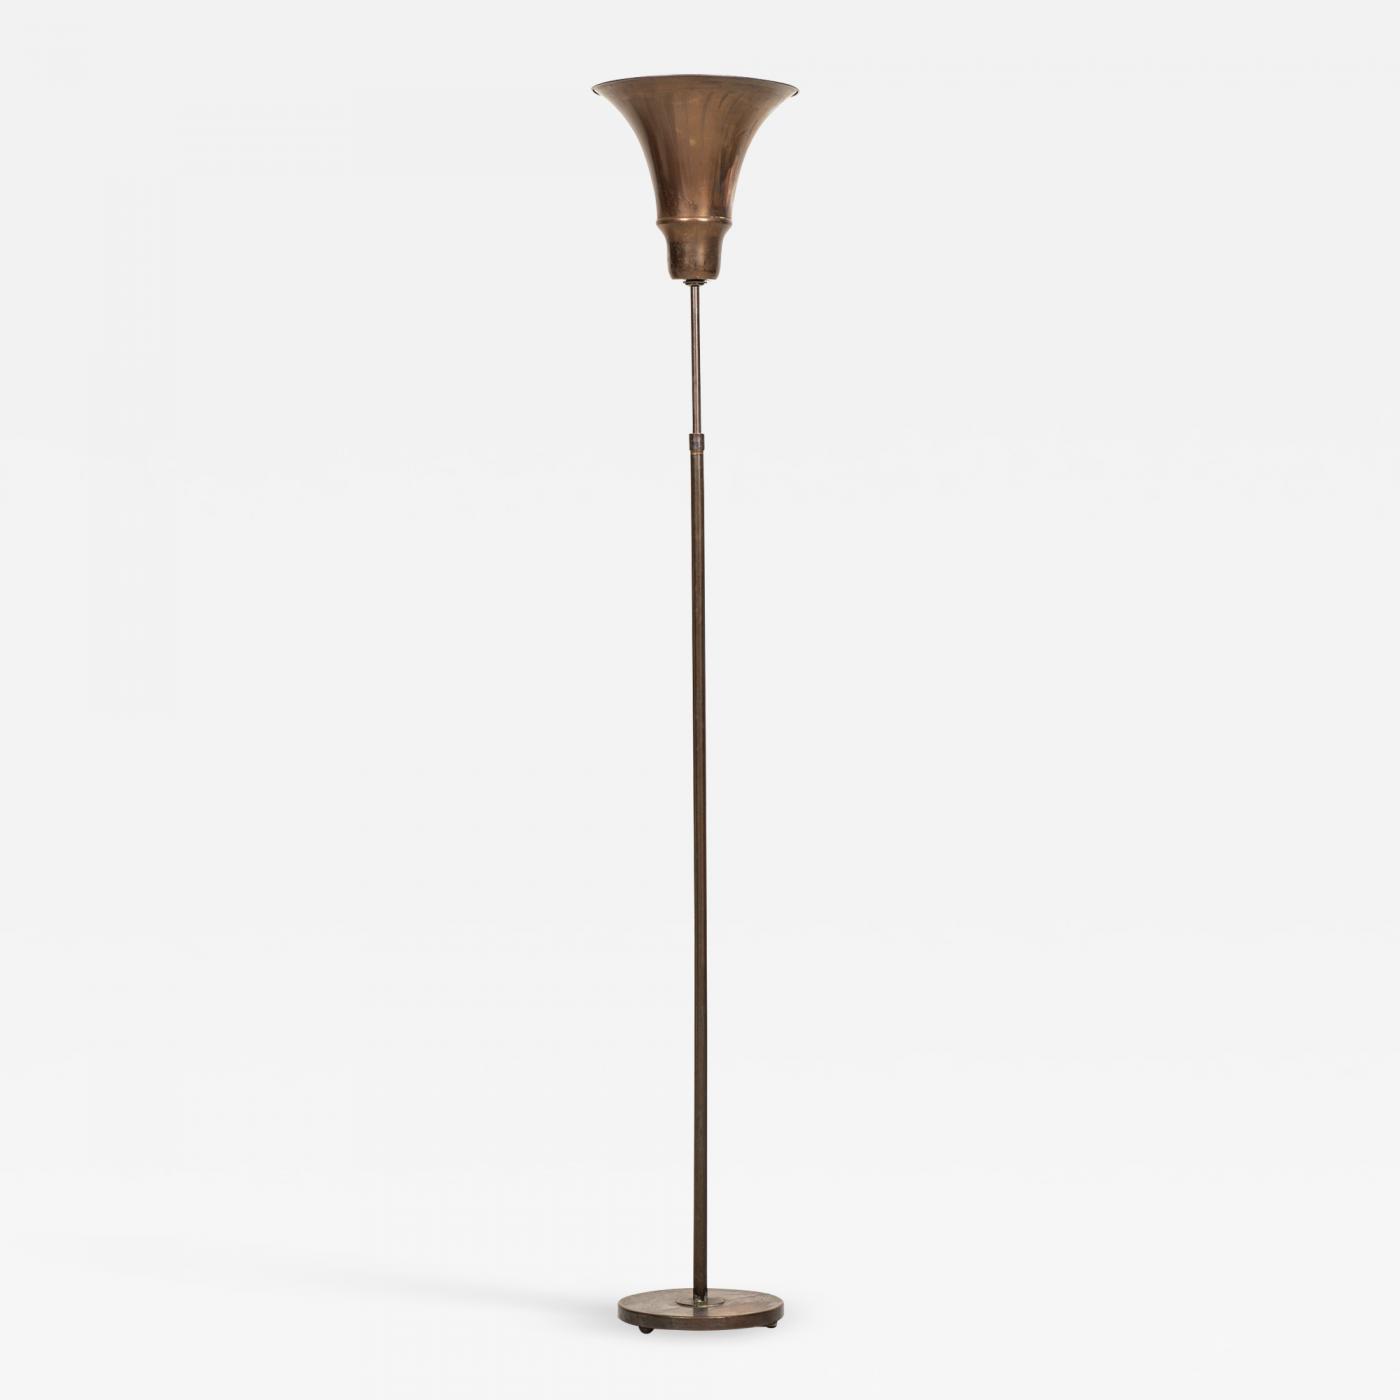 Floor Lamp / Uplight “The Bridge Lamp” Produced by Louis Poulsen